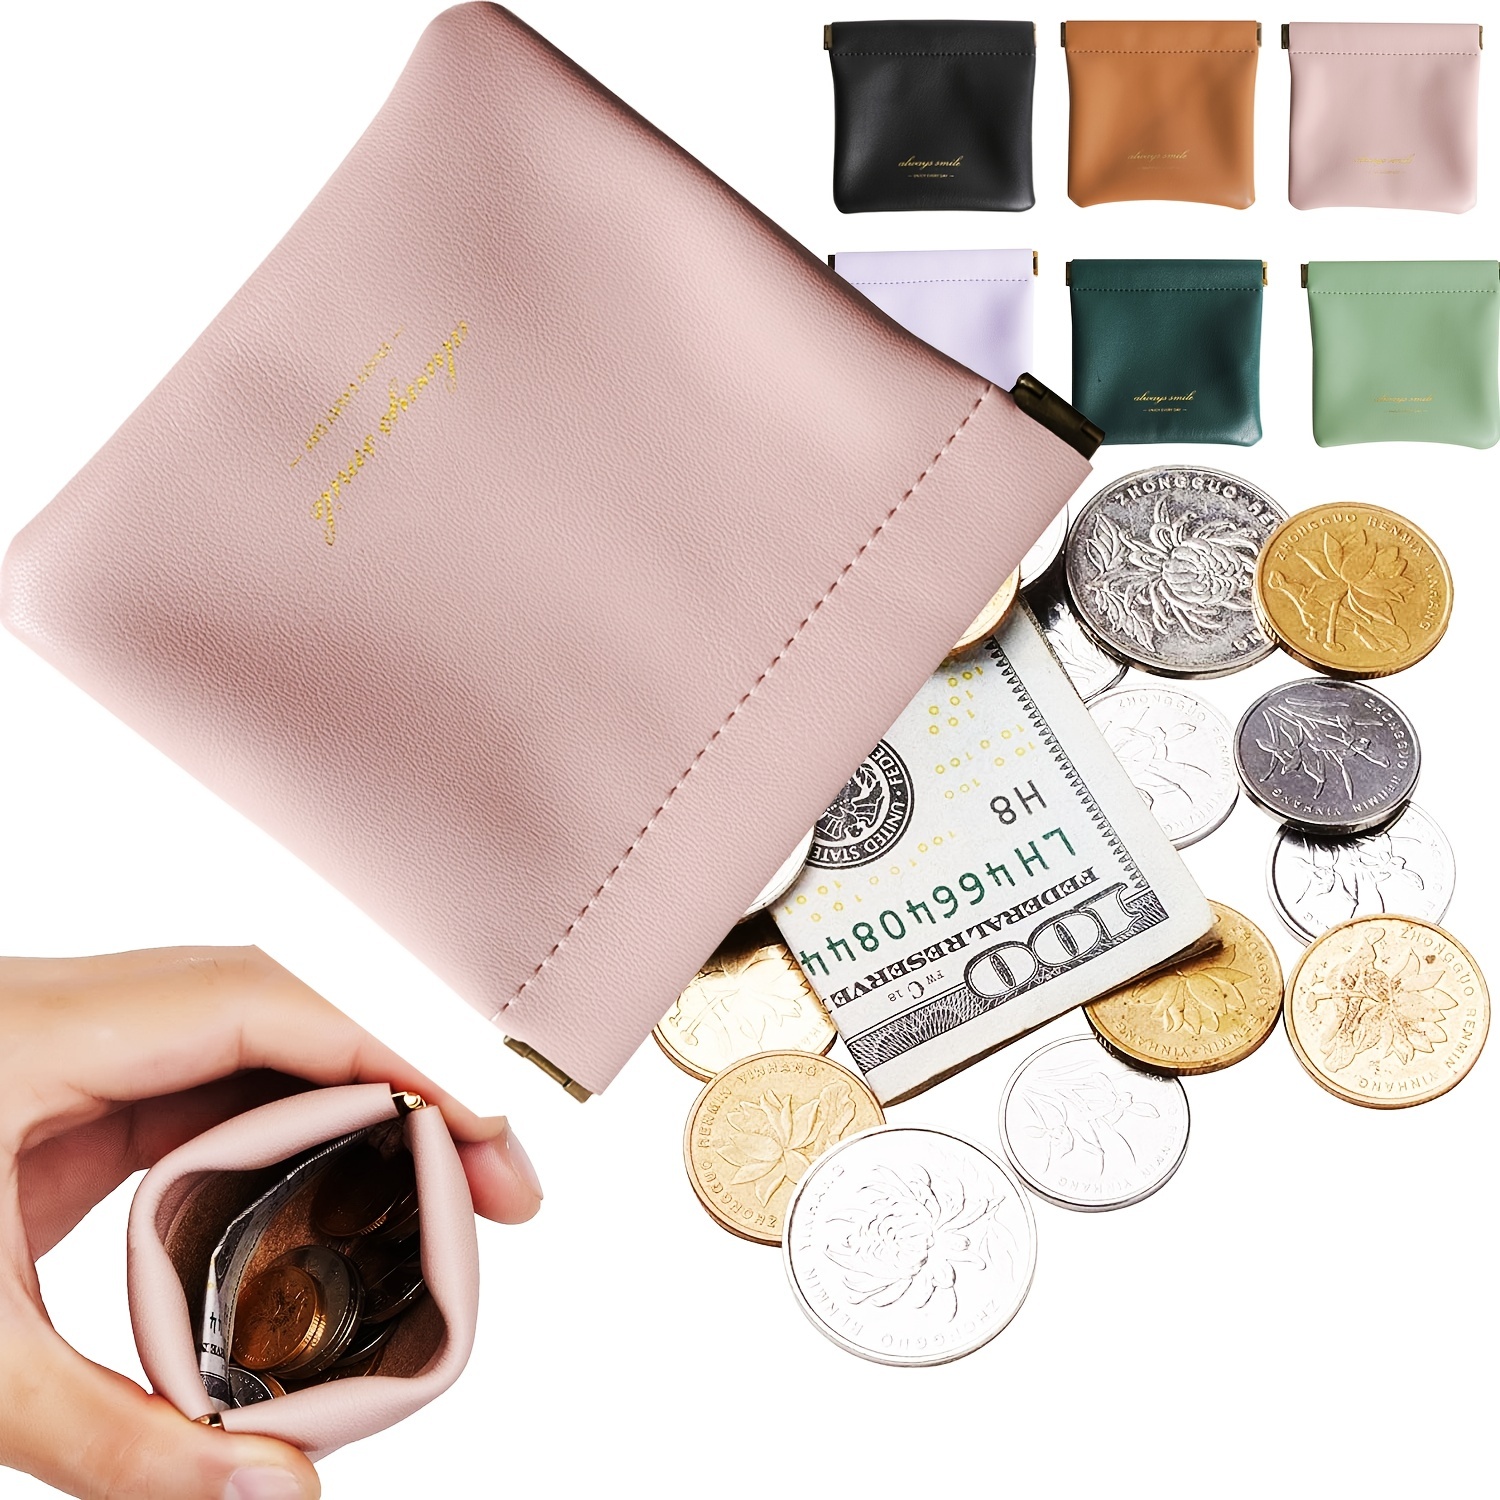 Mini Pu Leather Coin Purse With Keychain, Scarf Decor Earphone Bag, Lipstick  Bag With Snap Button, Car Key Bag Decoration Pendant - Temu